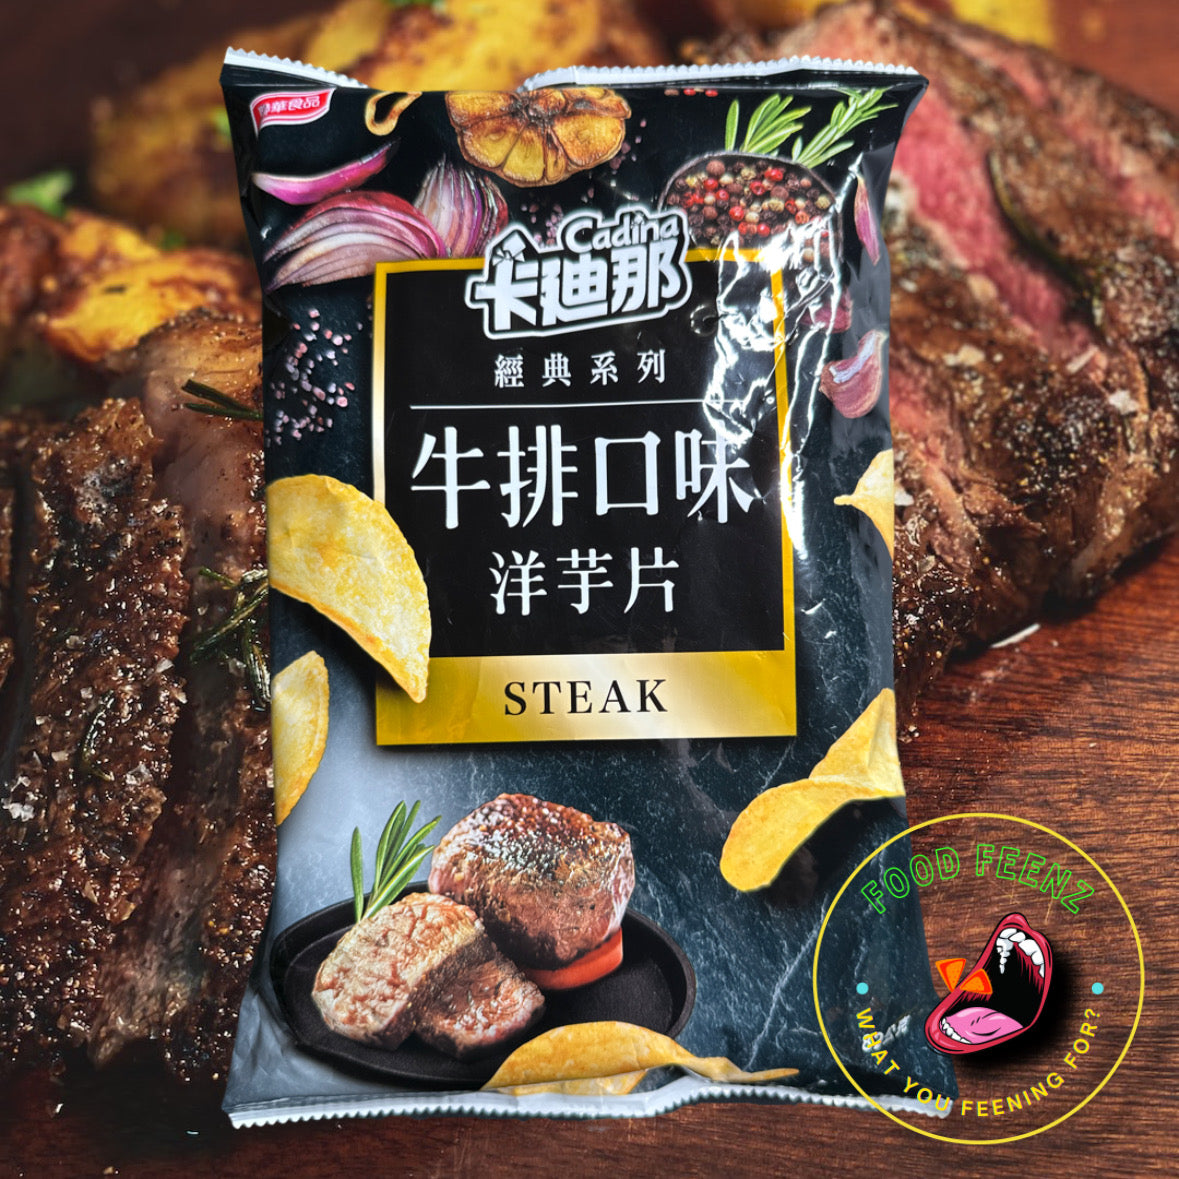 Cadina Steak Flavored Chips (Taiwan)